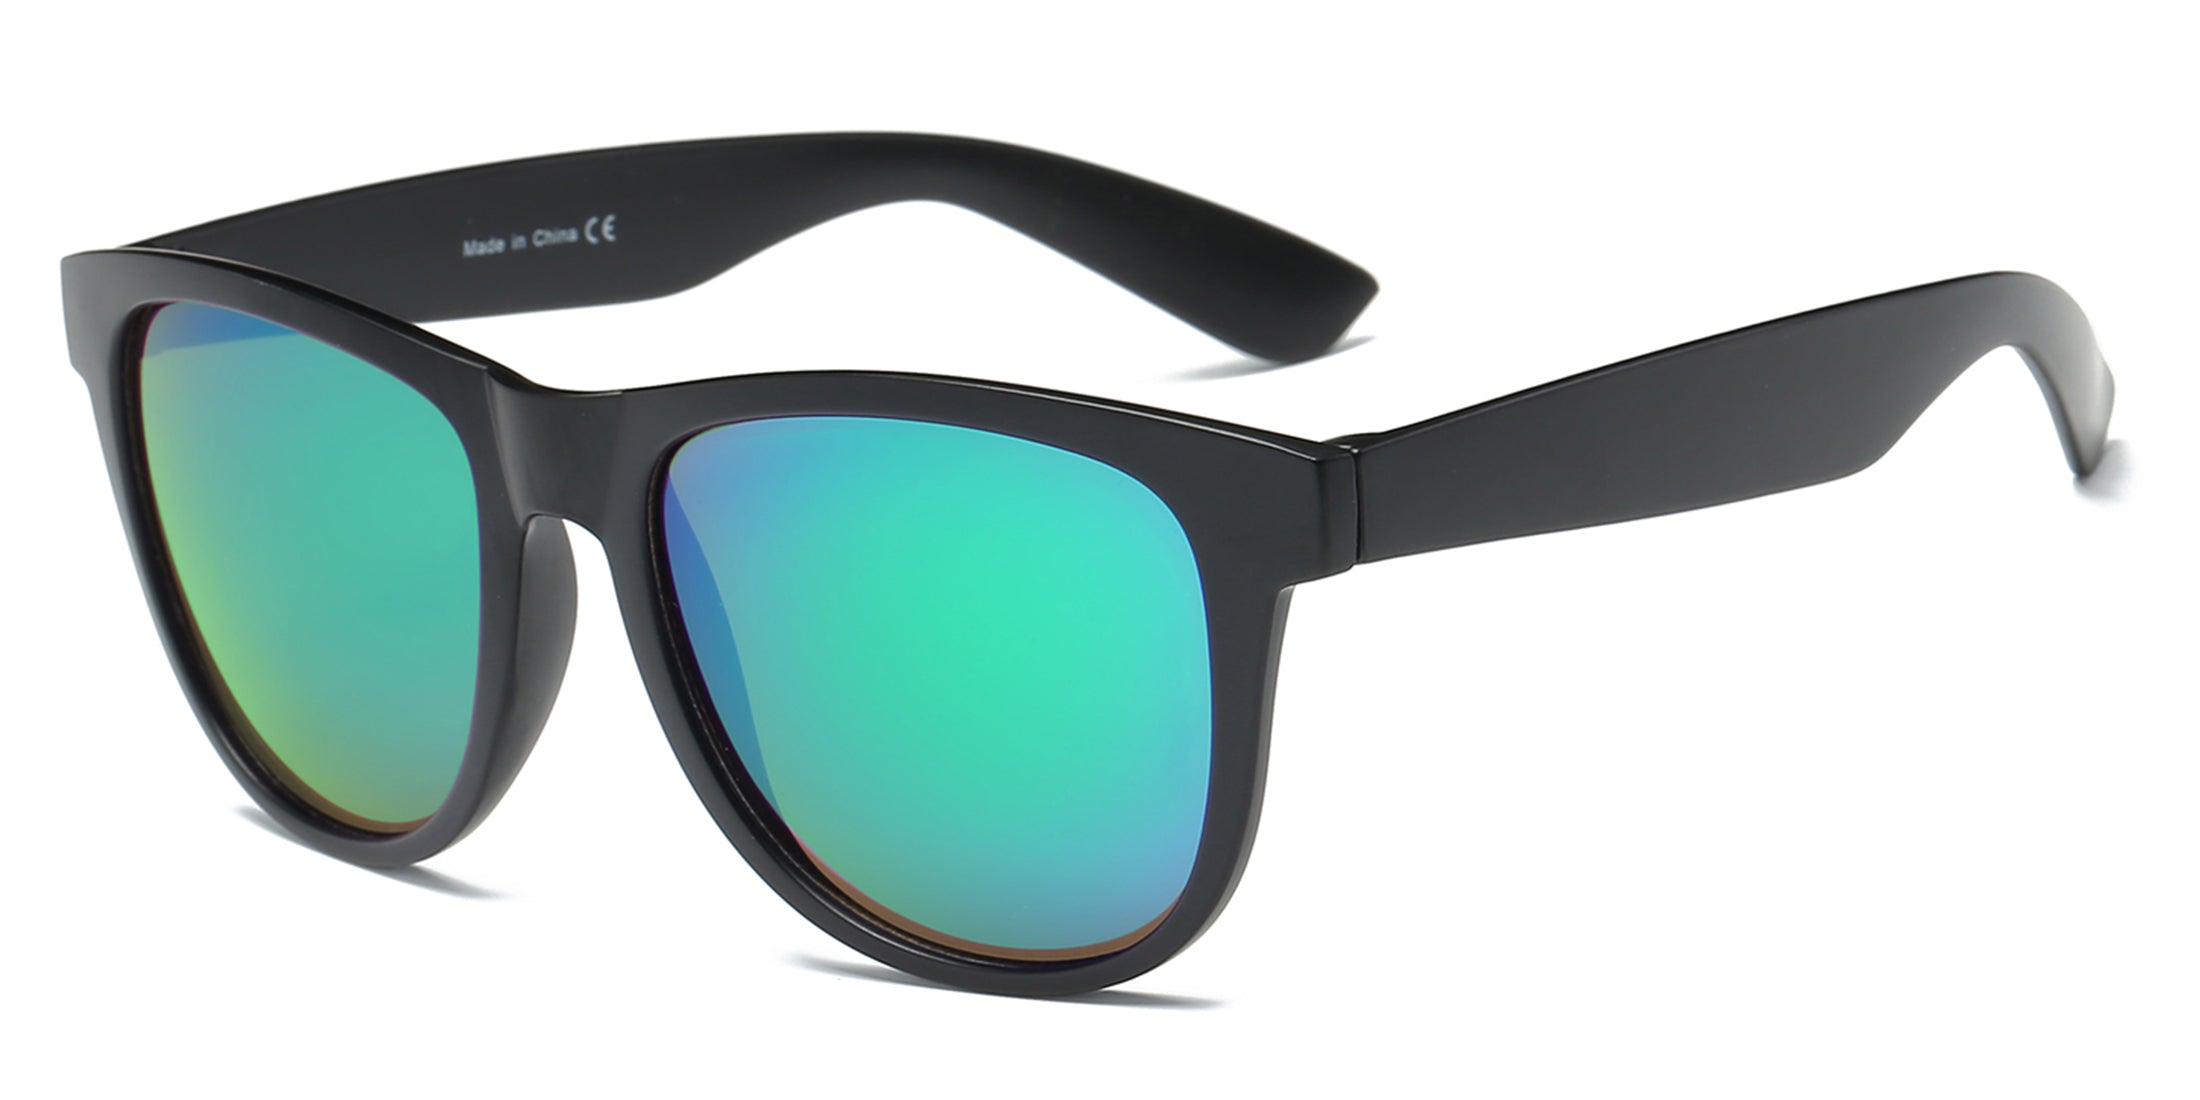 S1031 - Retro VINTAGE Round Shape Mirrored Sunglasses Black / Green